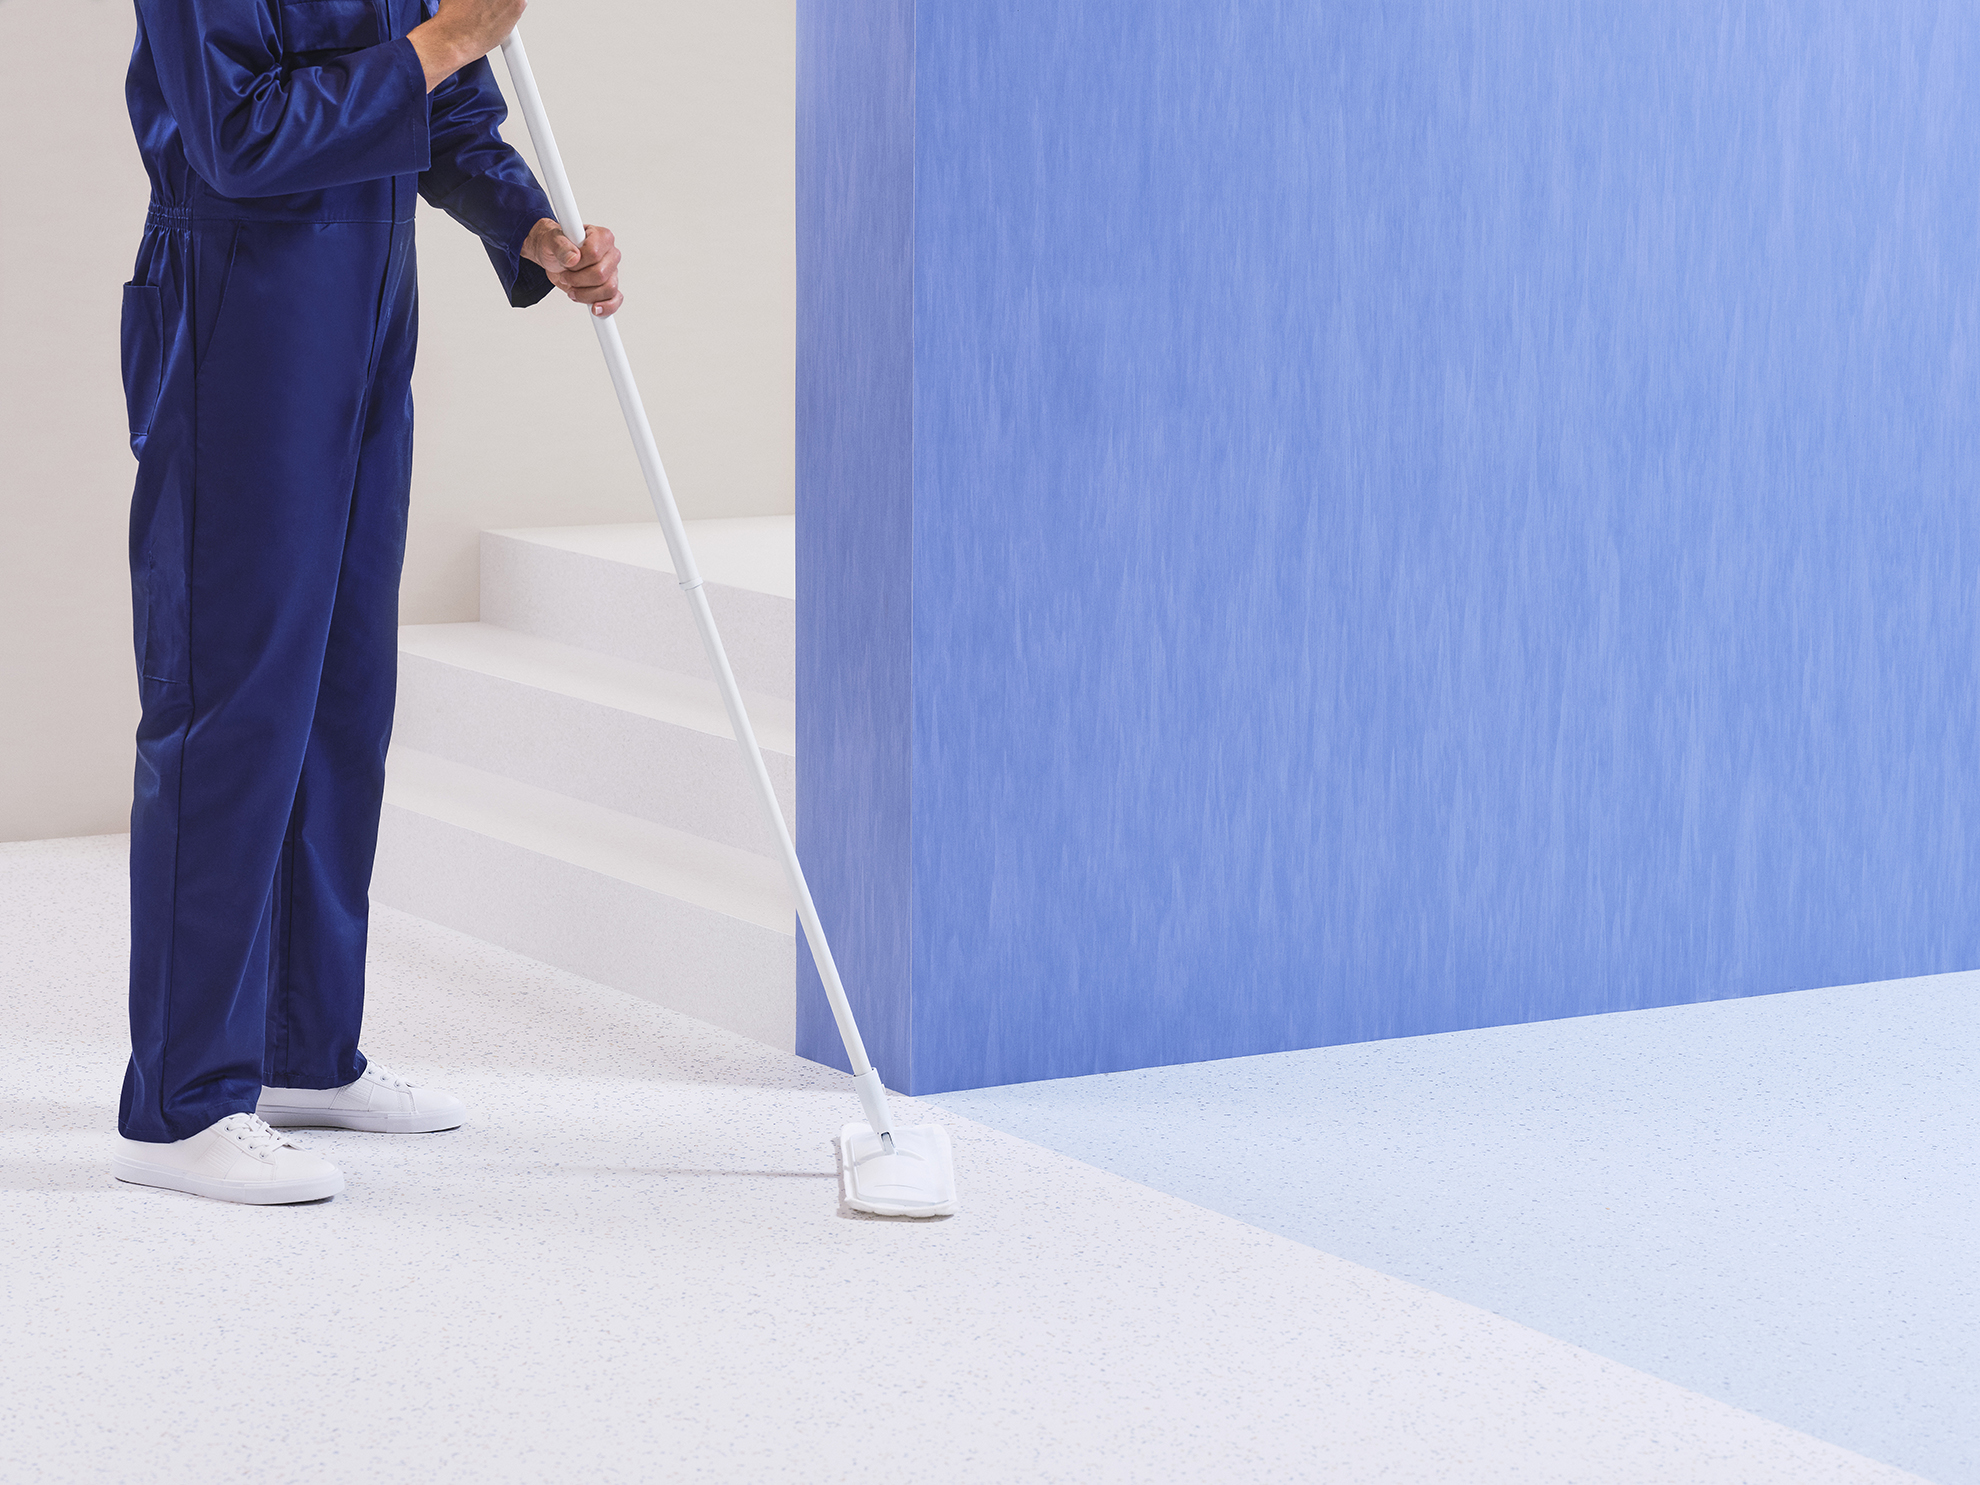 Tarkett floors helps maintain good hygiene